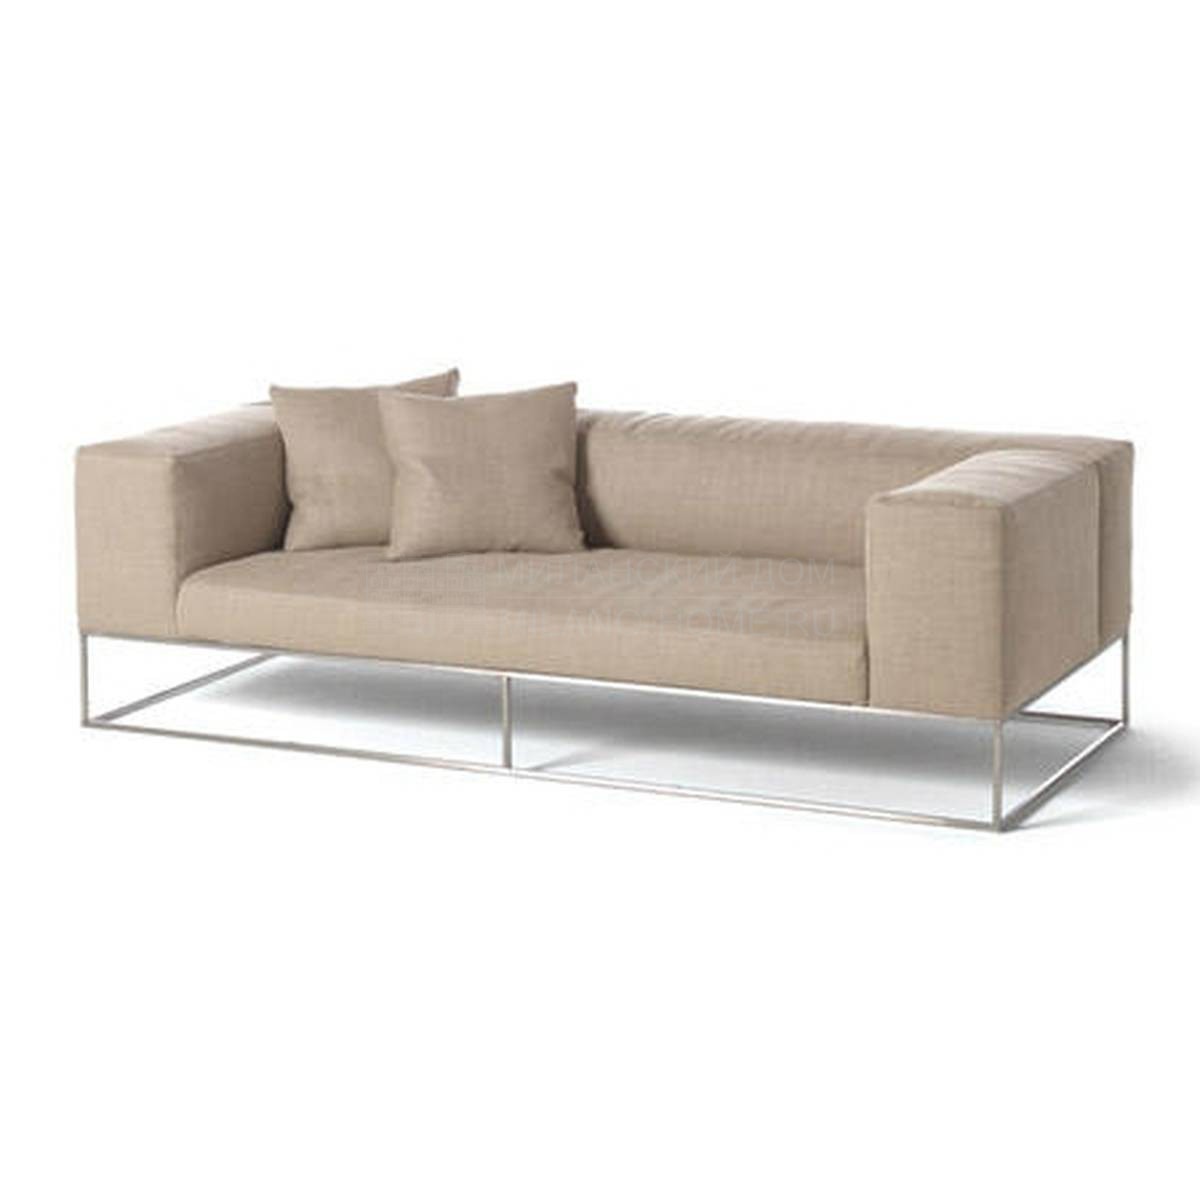 Прямой диван Ile sofa из Италии фабрики LIVING DIVANI